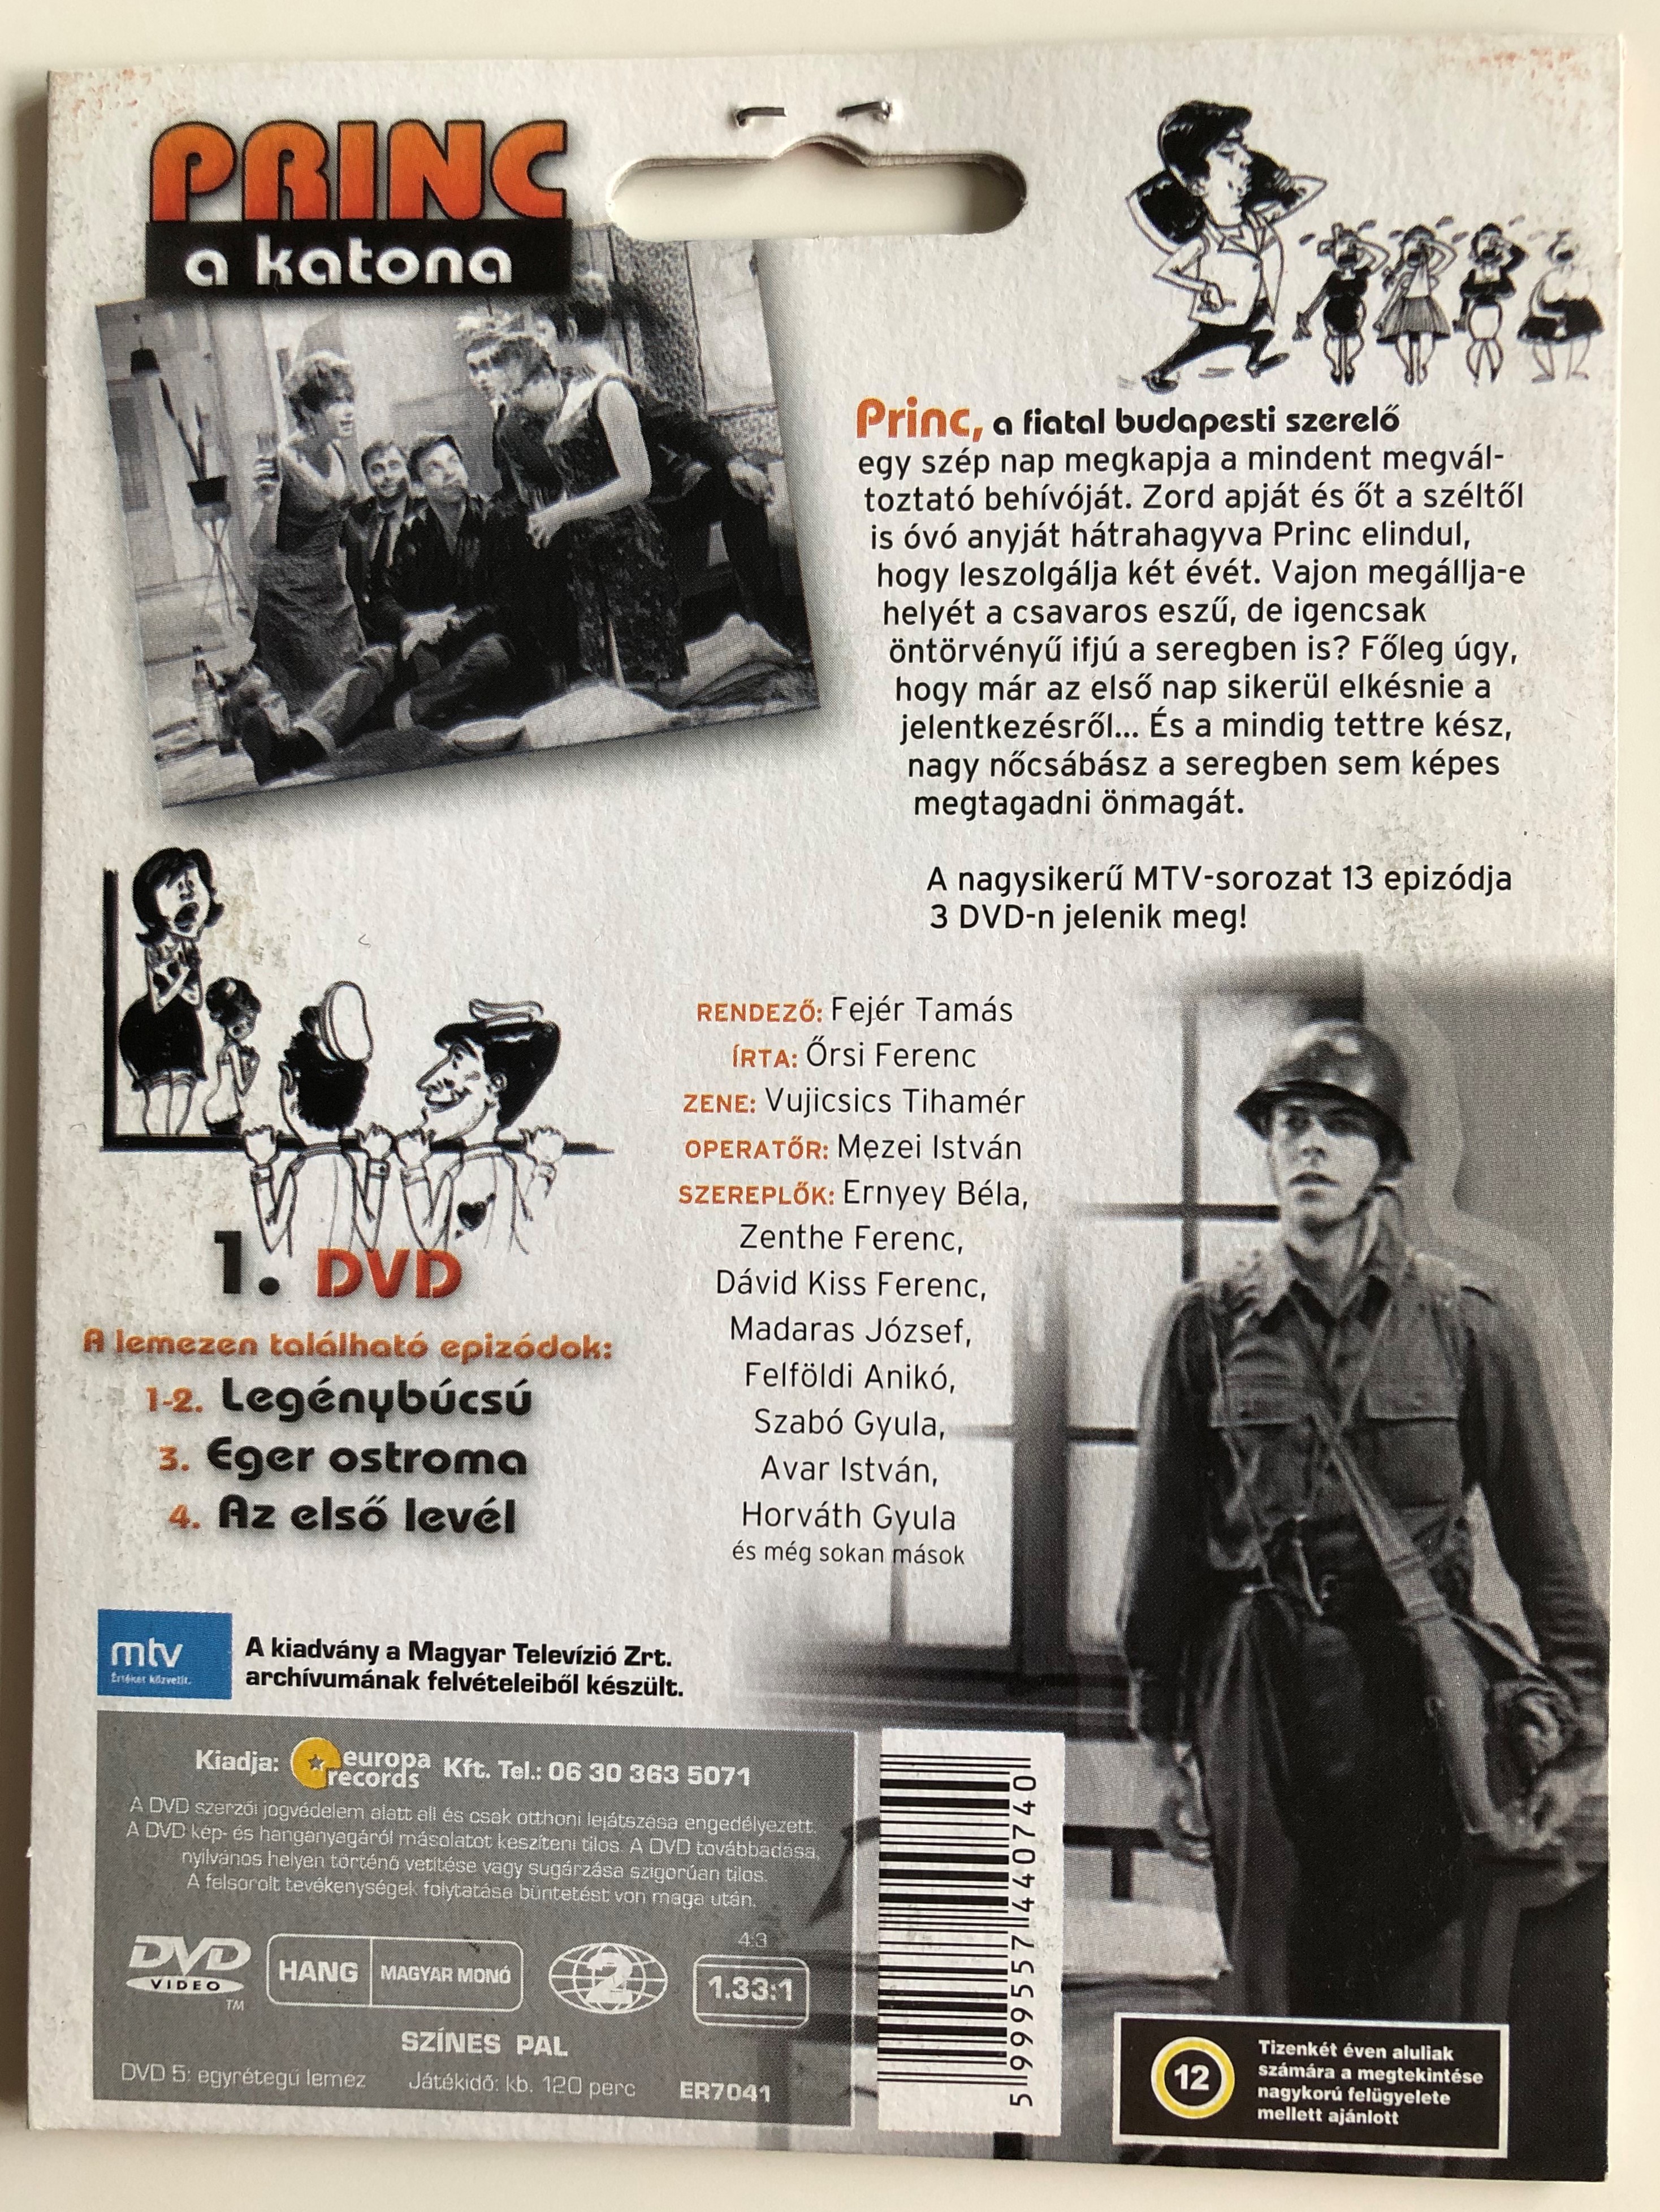 Princ a katona DVD 1966 Vol 1. 1.JPG